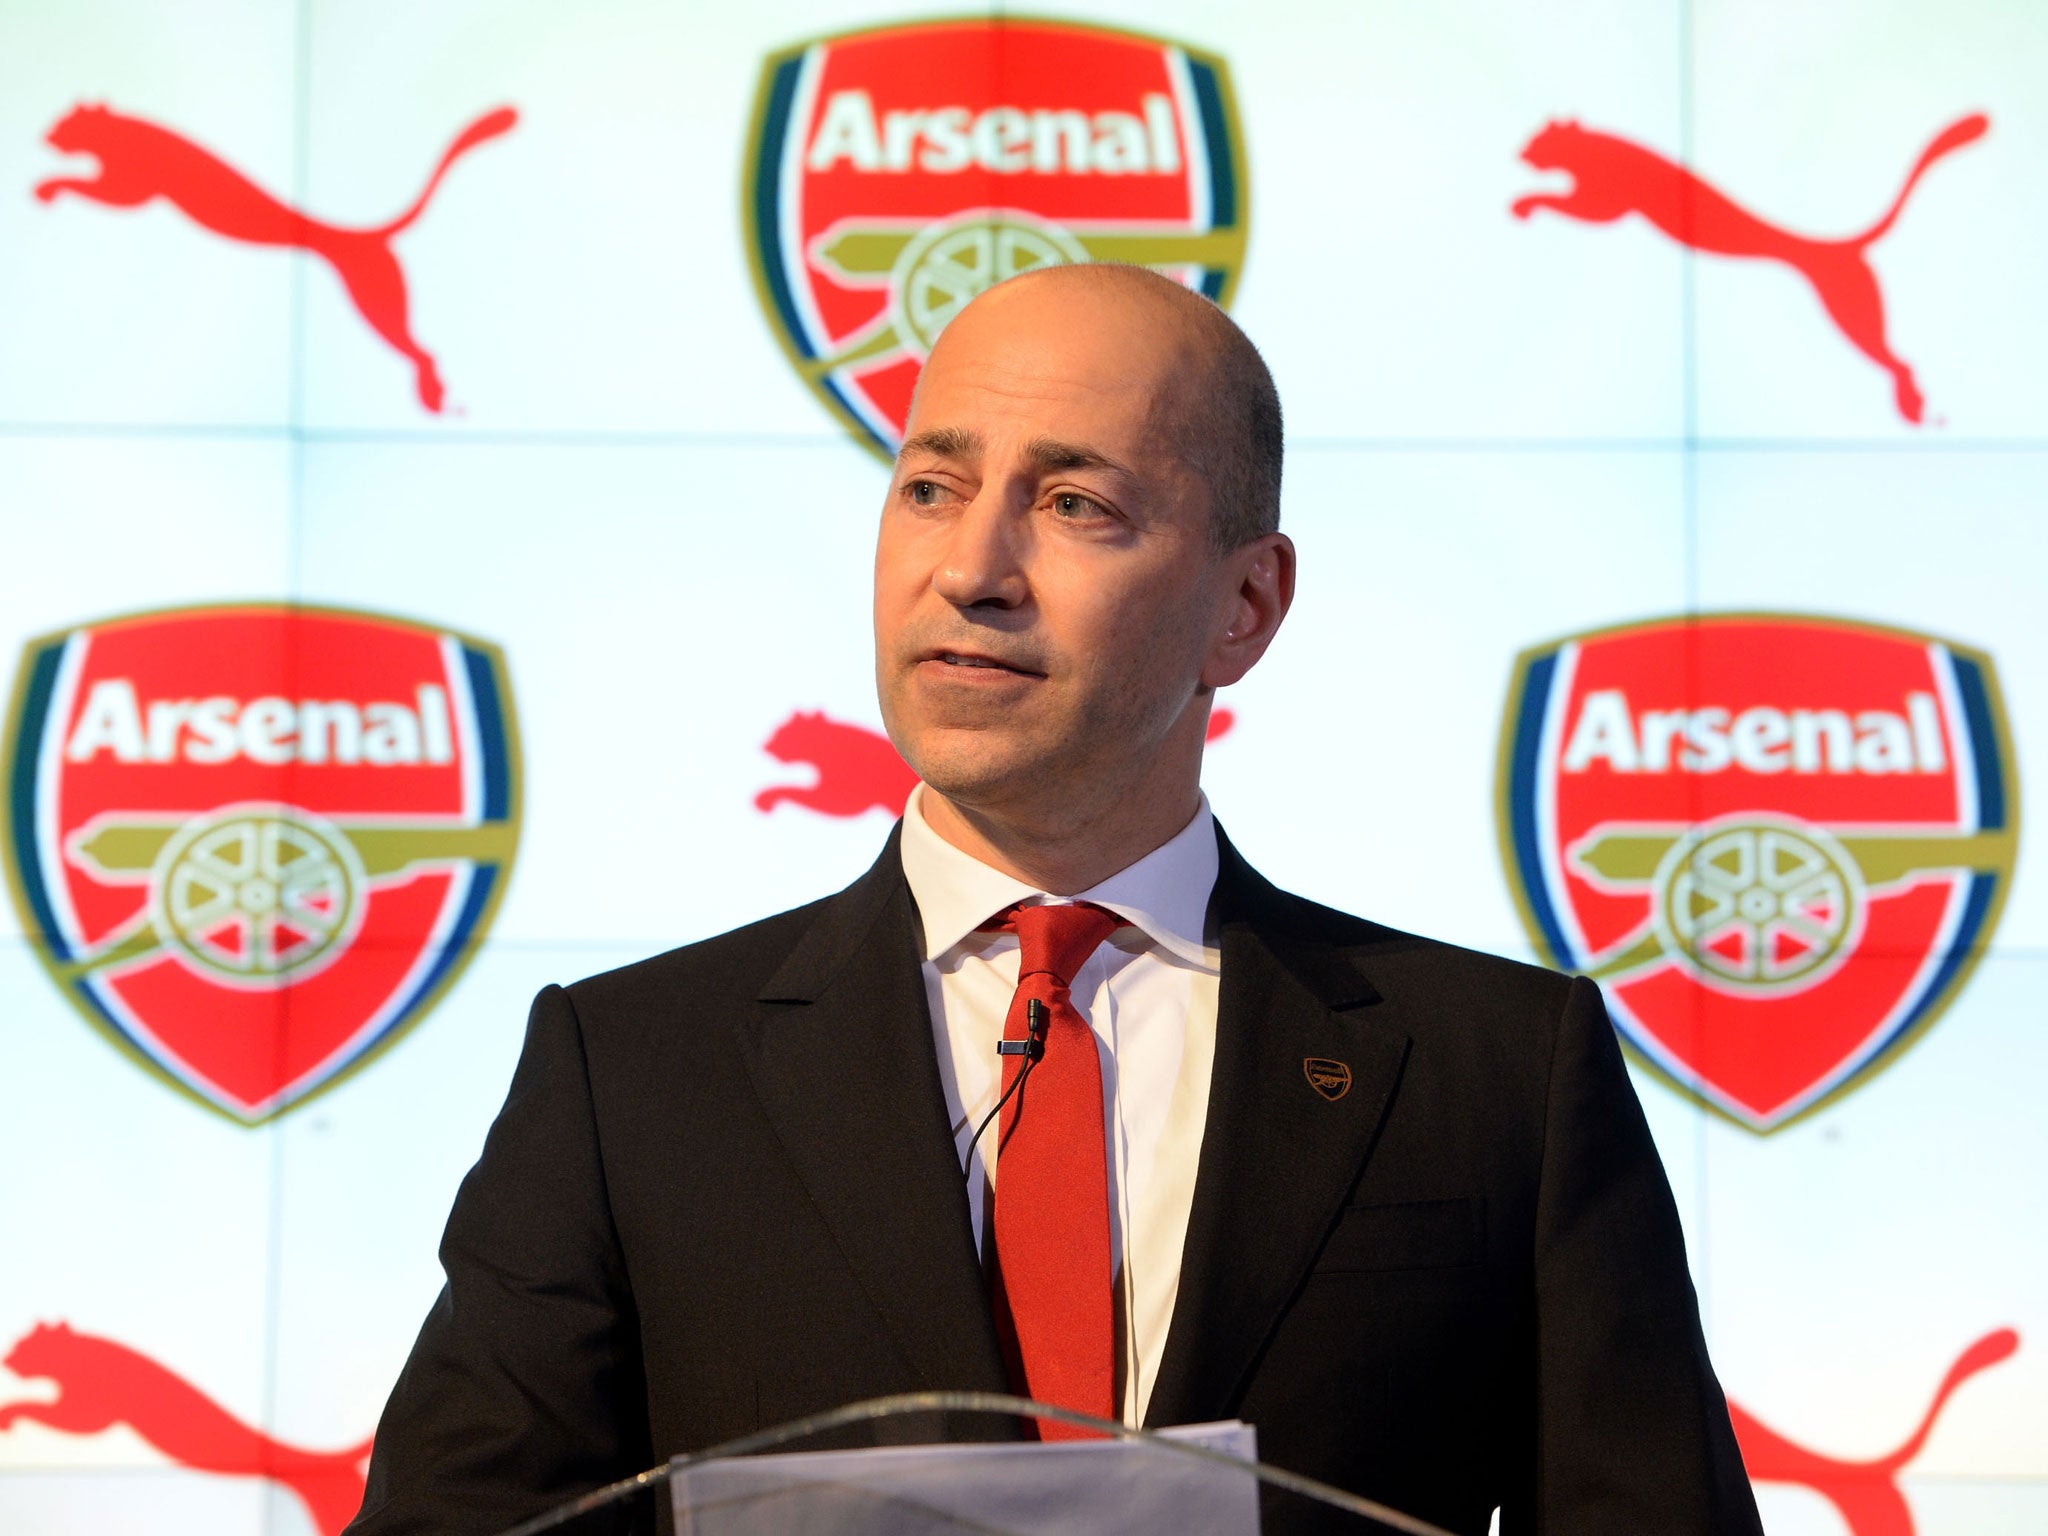 Arsenal chairman Ivan Gazidis